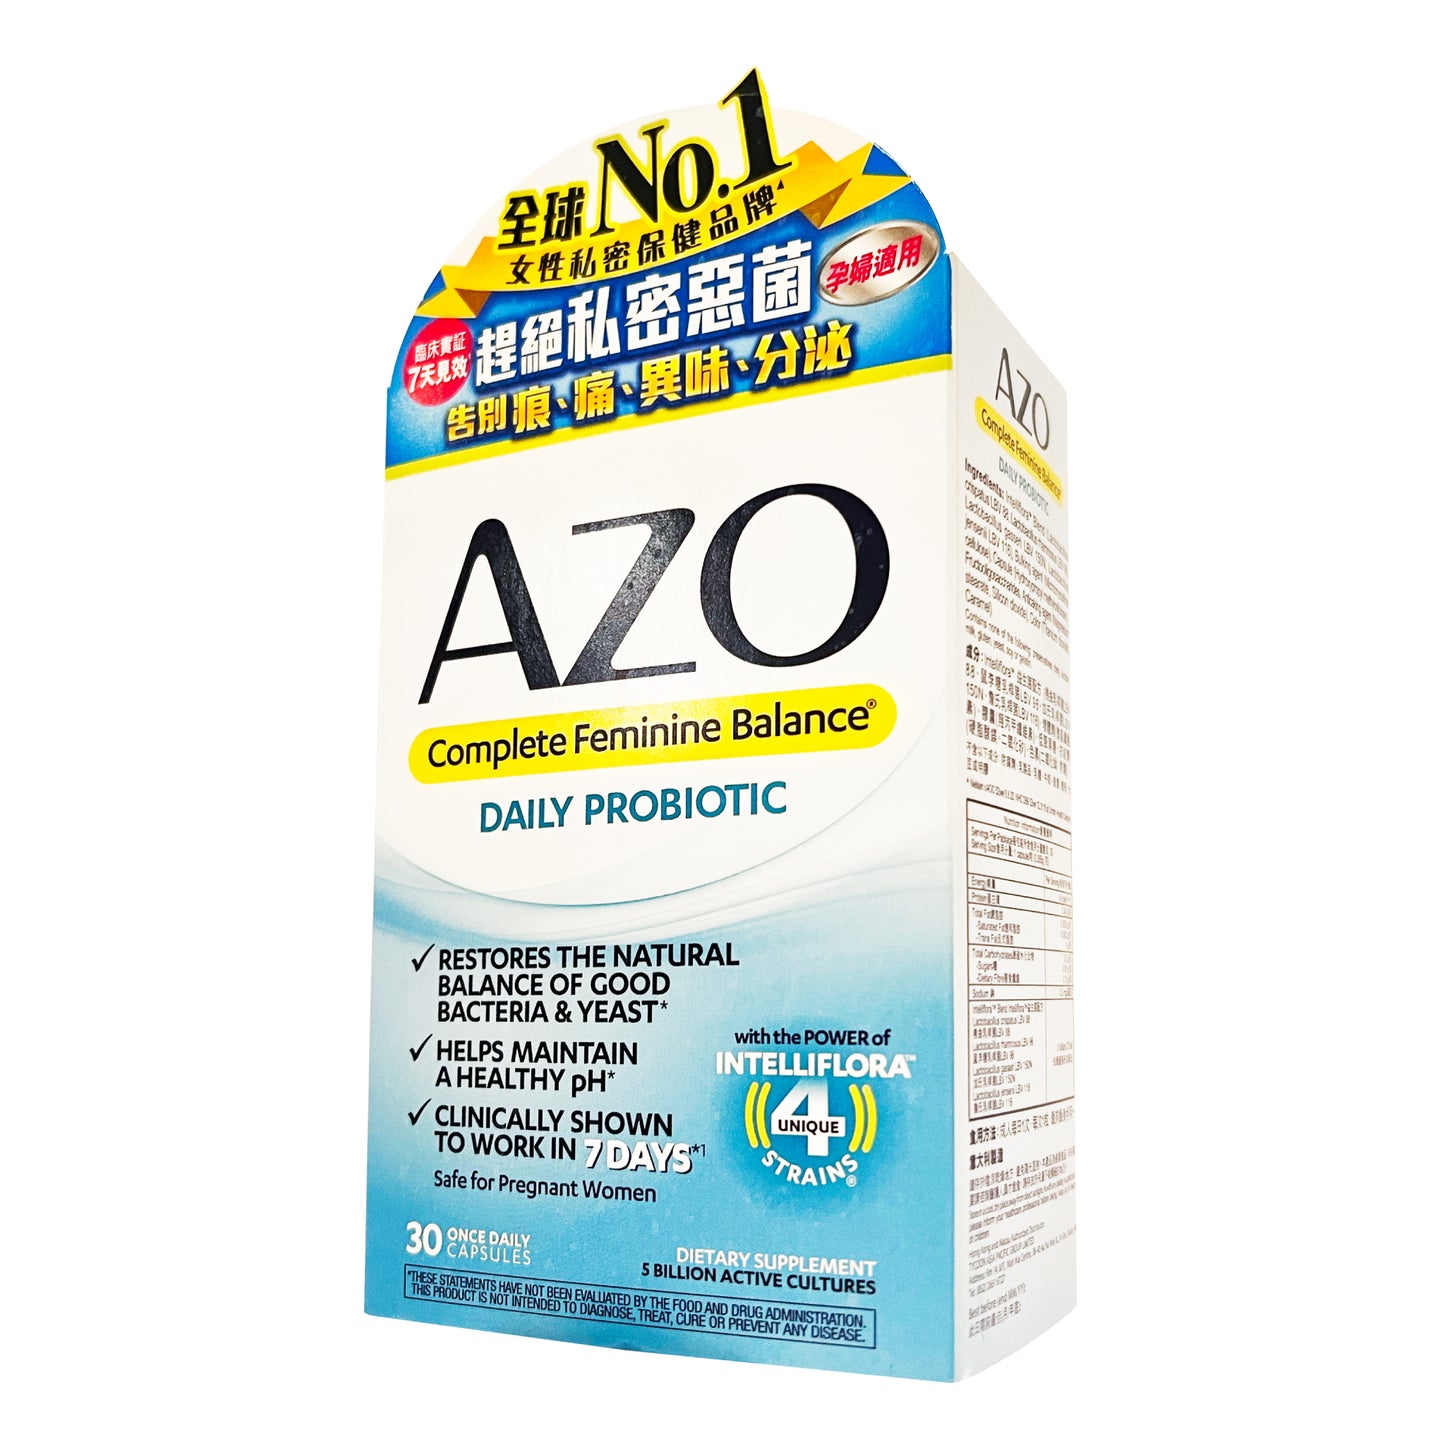 AZO 私護寧 女性專用益生菌 (雙效升級配方) 30 粒